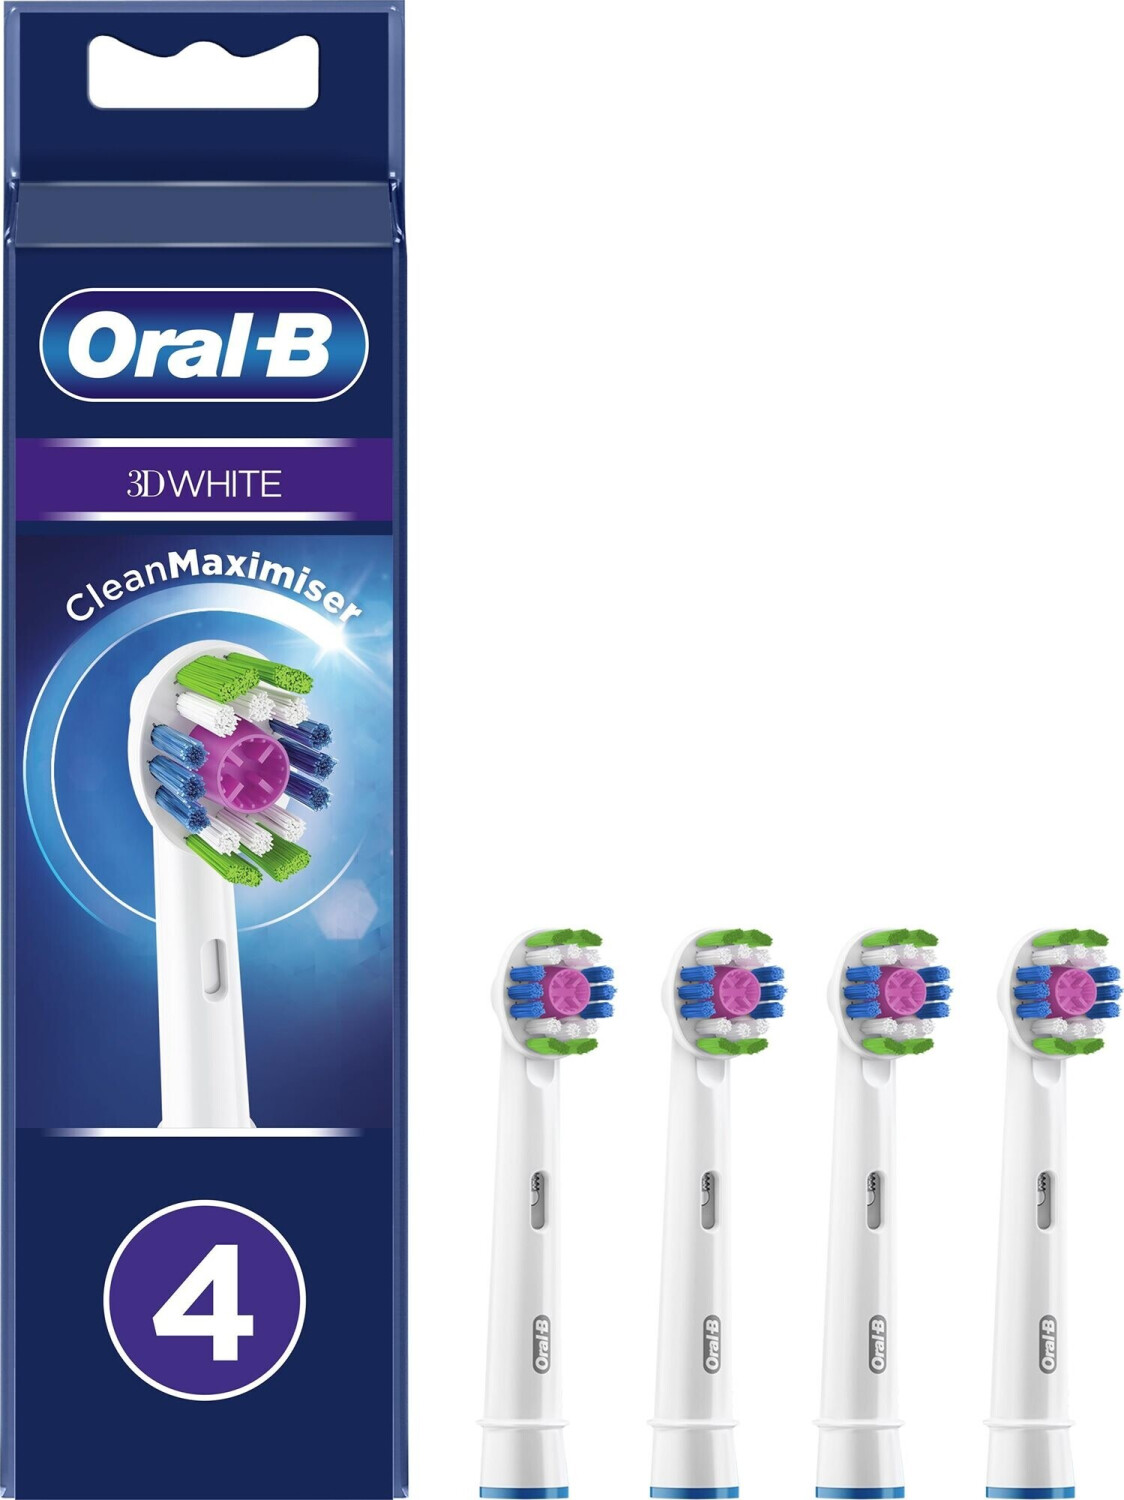 Photos - Electric Toothbrush Oral-B 3DWhite CleanMaximiser Replacement Brush  (4 pcs)